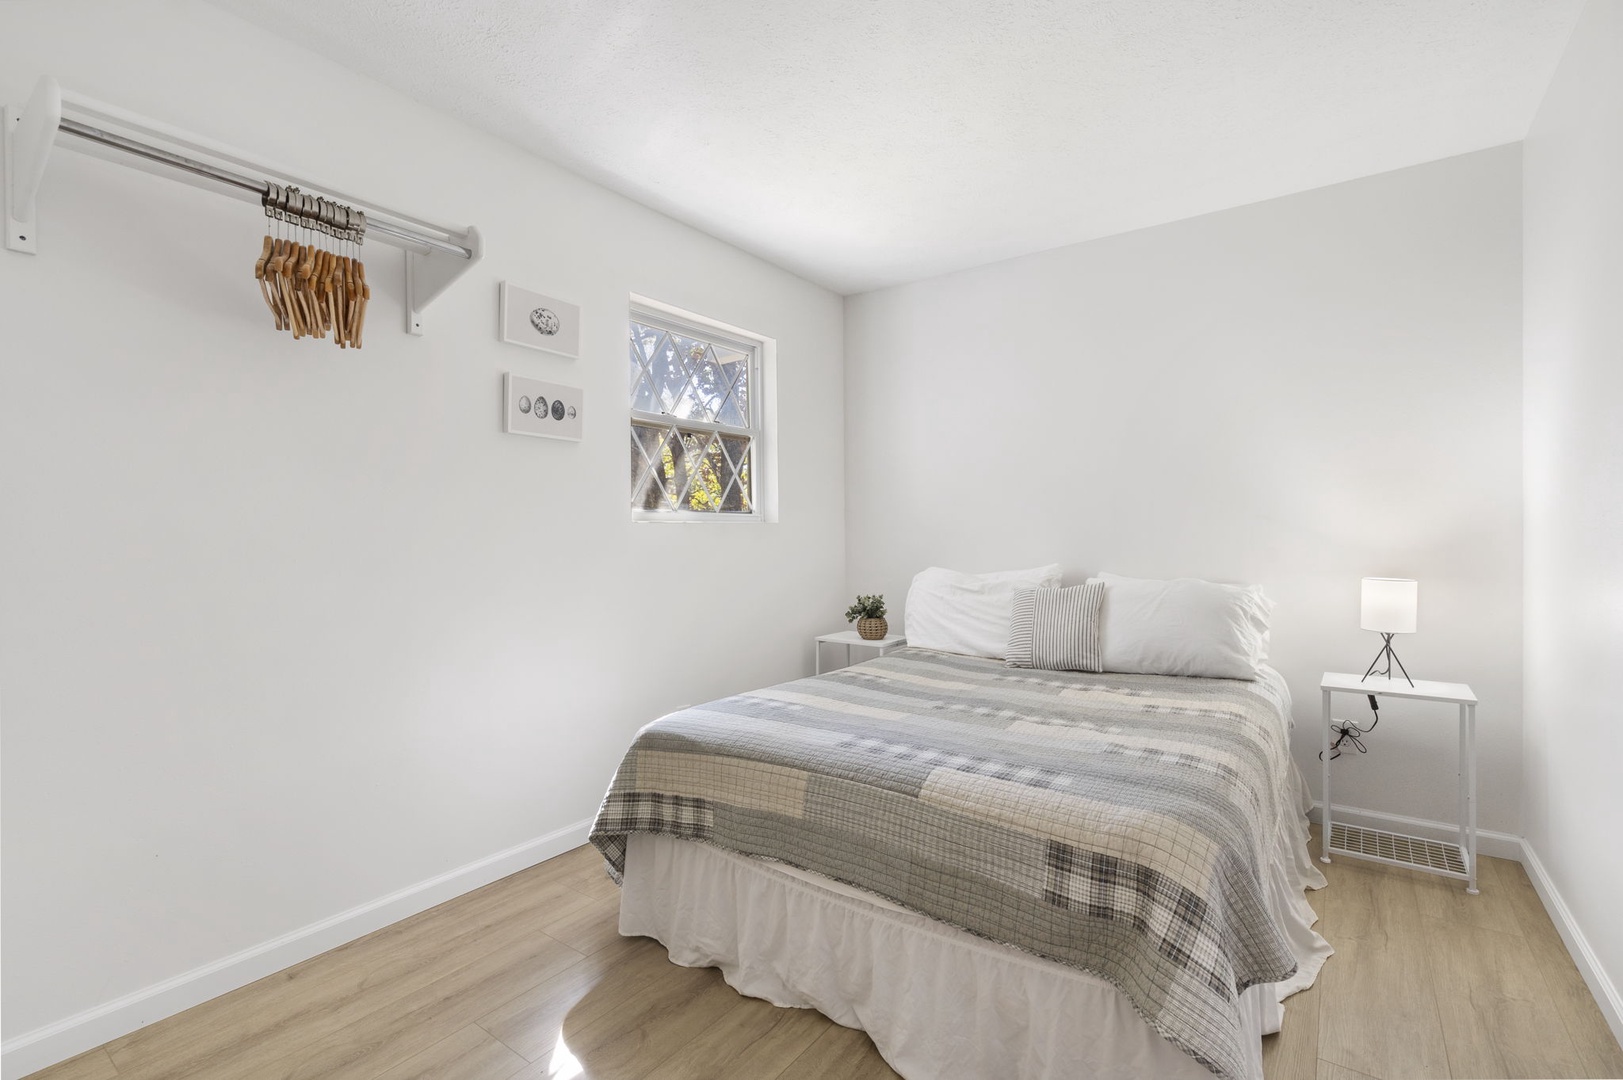 This 2nd floor bedroom offers a queen bed & lots of light